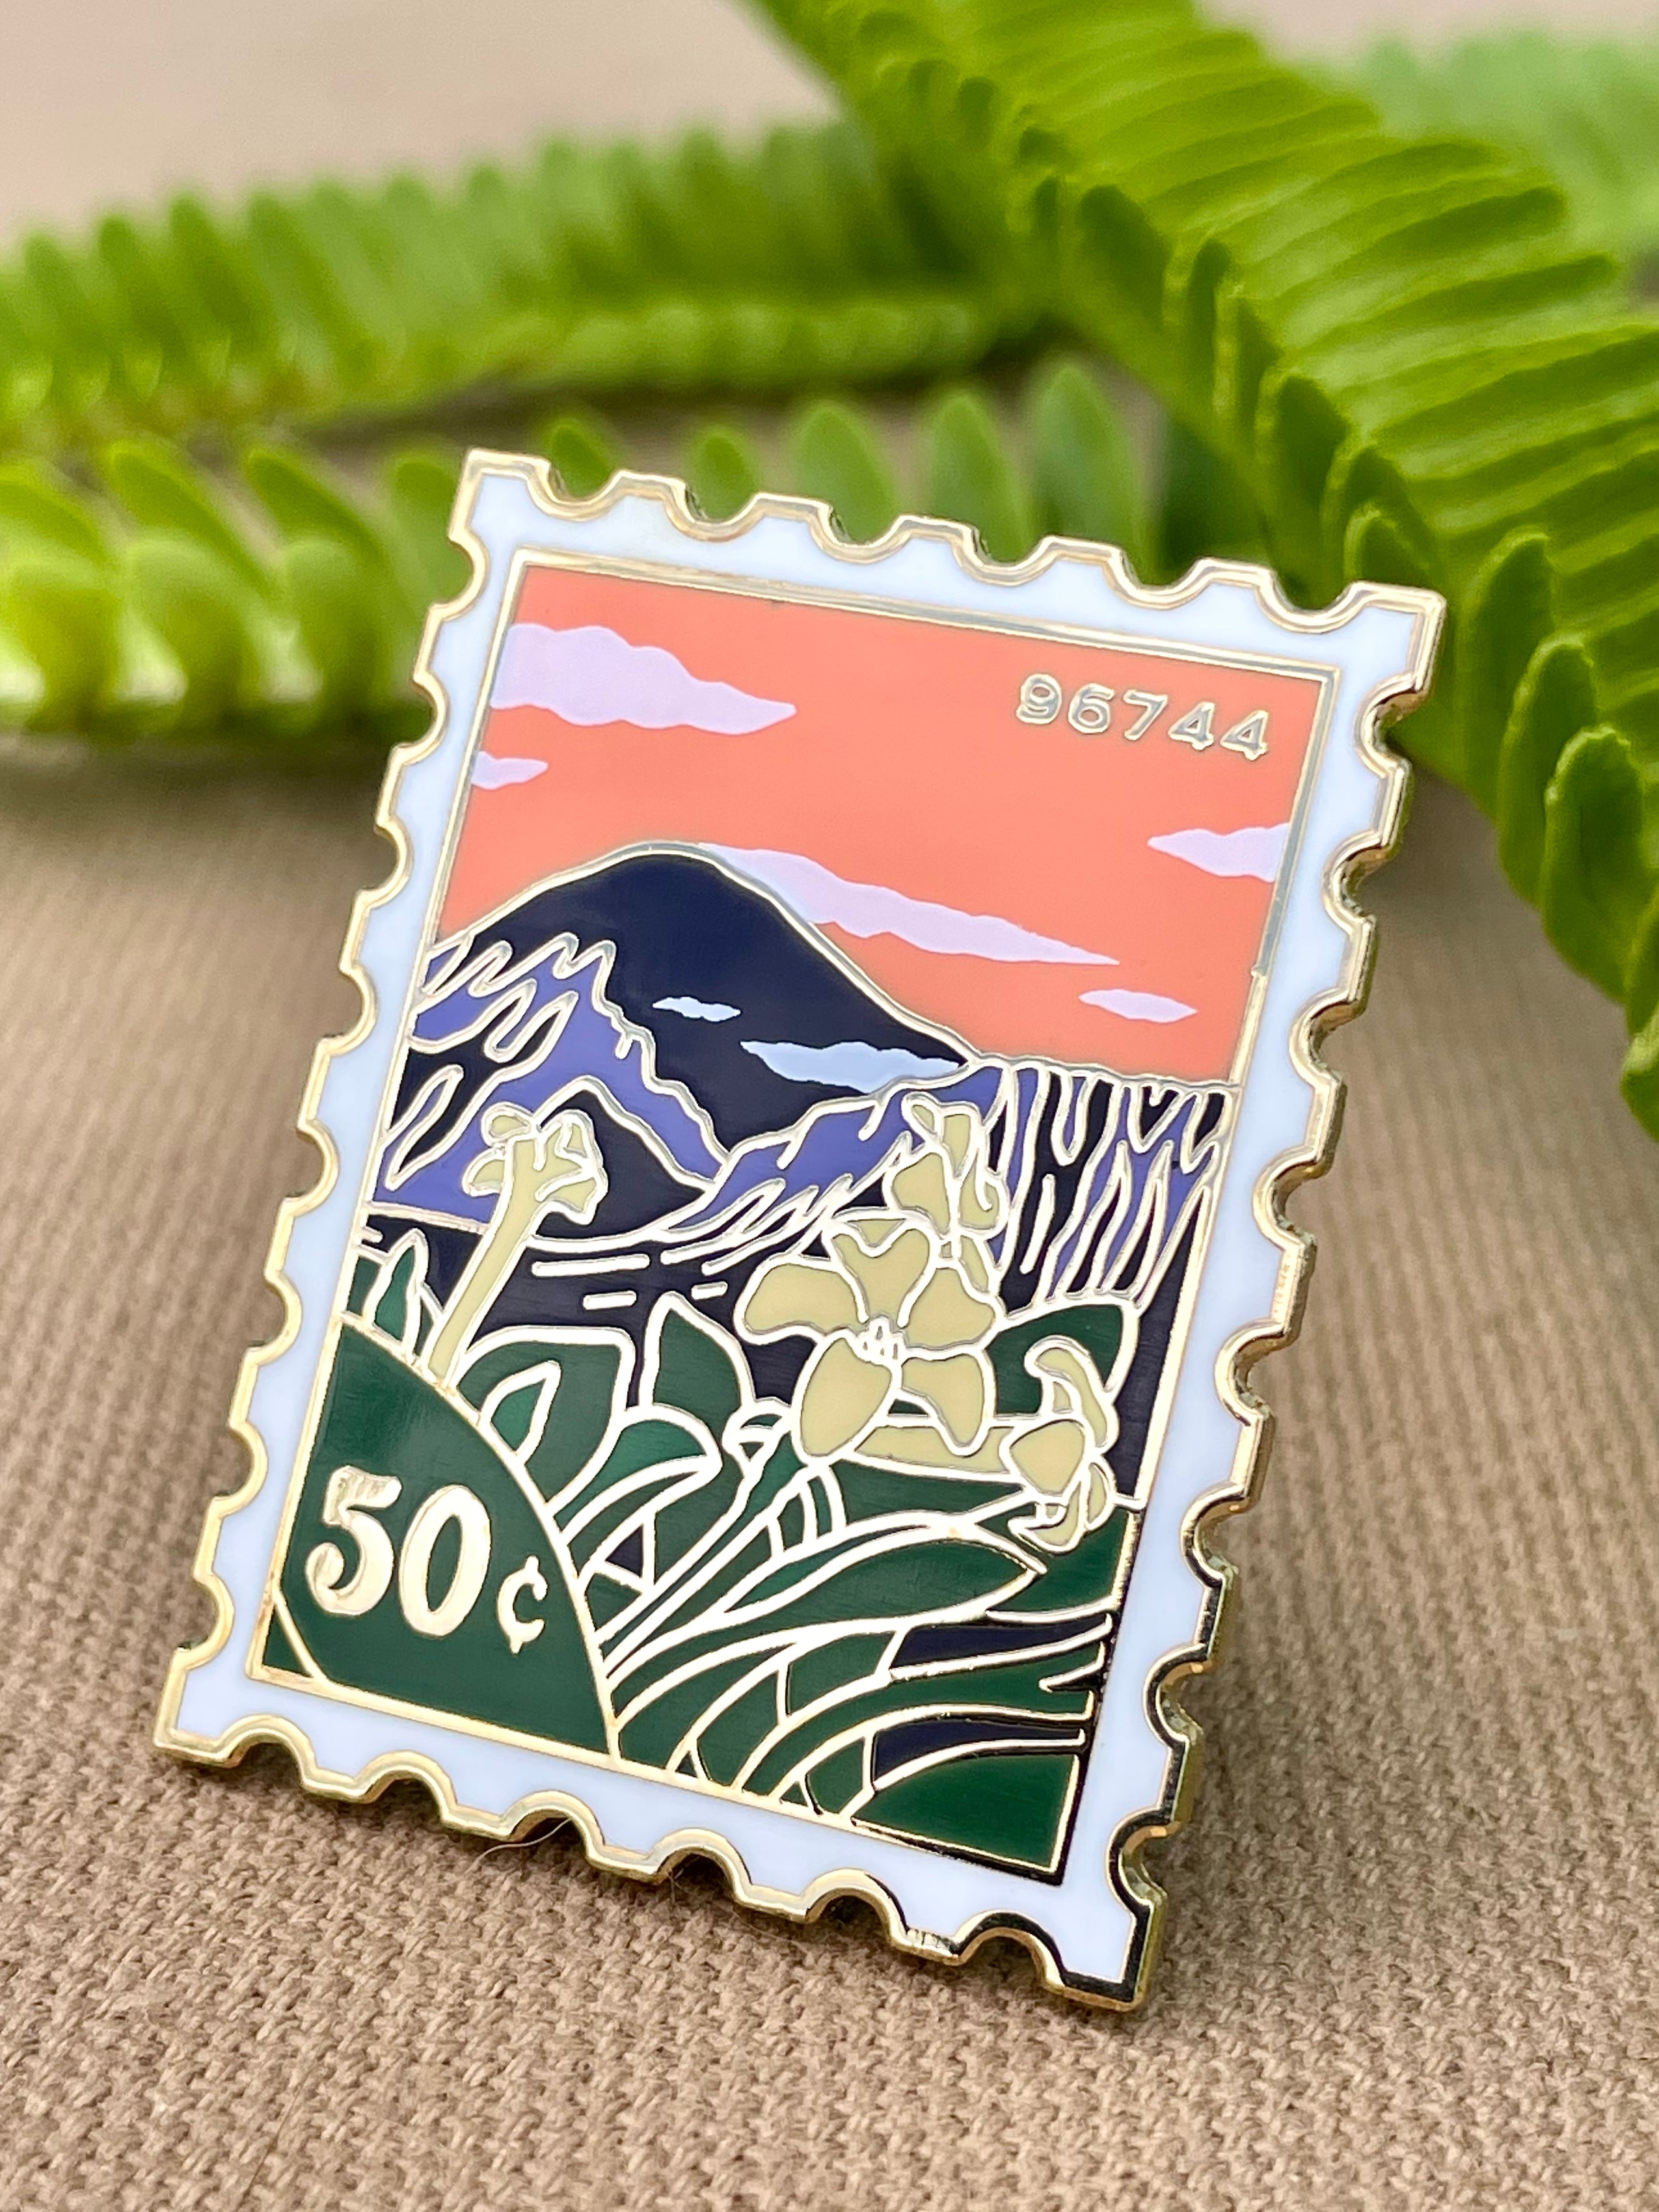 SECONDS ✷ Nu'uanu Pali Post Stamp Pin